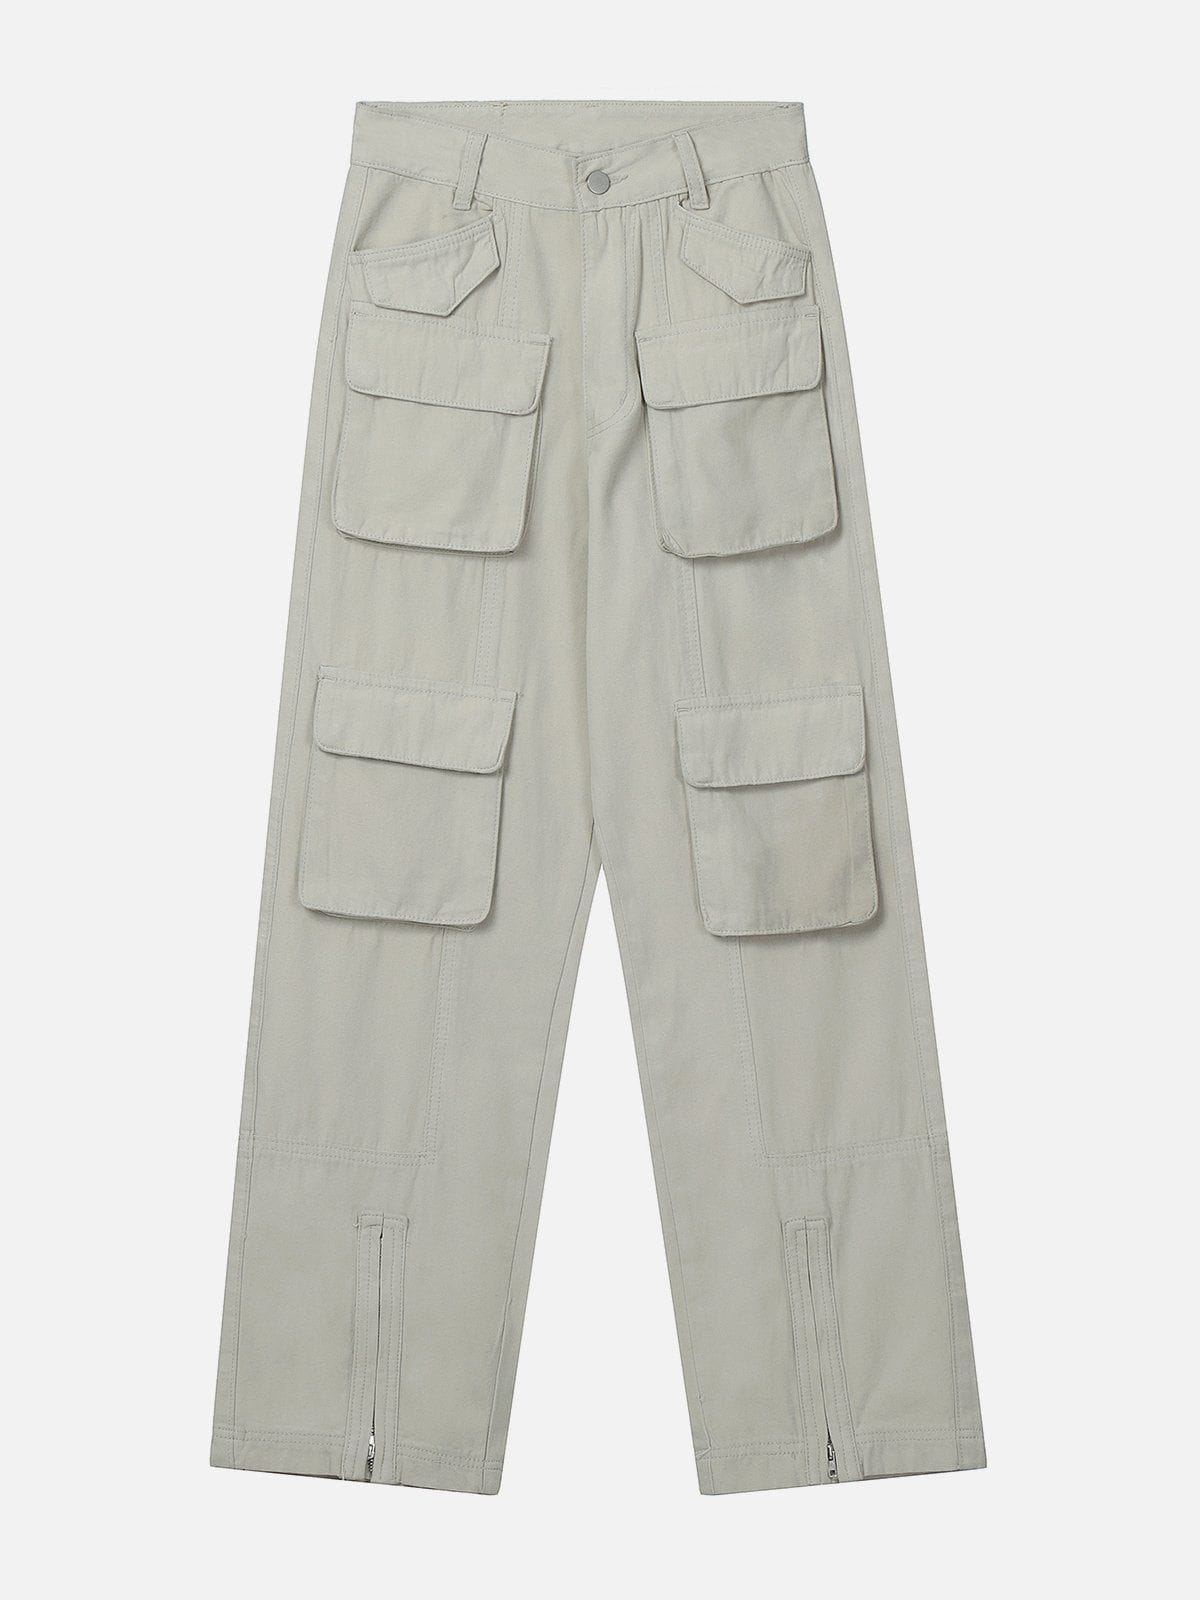 Sneakerland® - Pocket Patchwork Cargo Pants